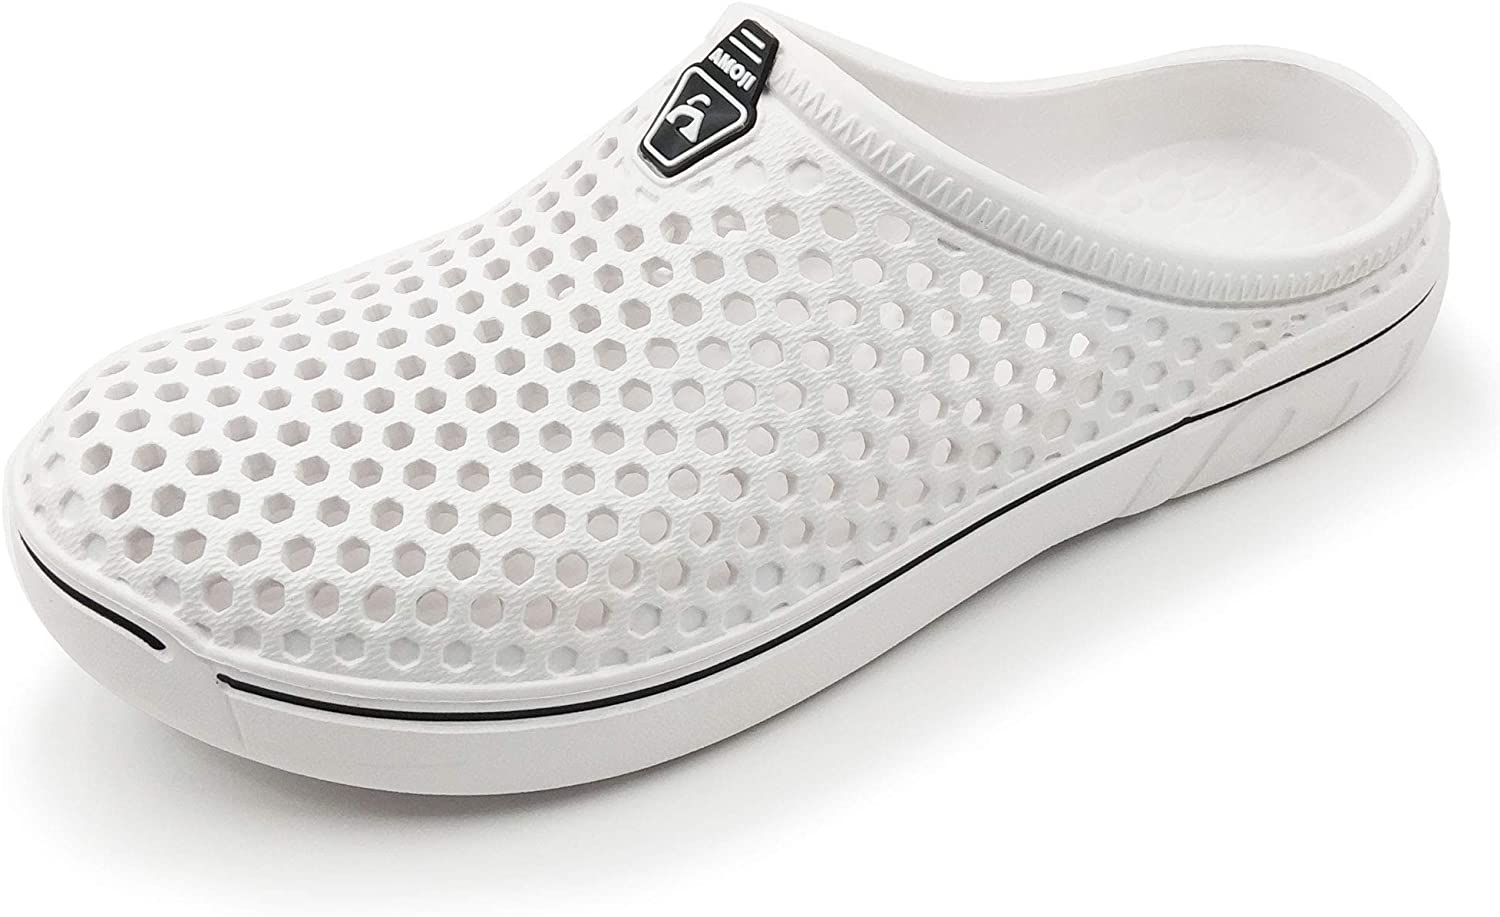 AMOJI Unisex Adult Clogs Garden Shoes Slippers AM1761